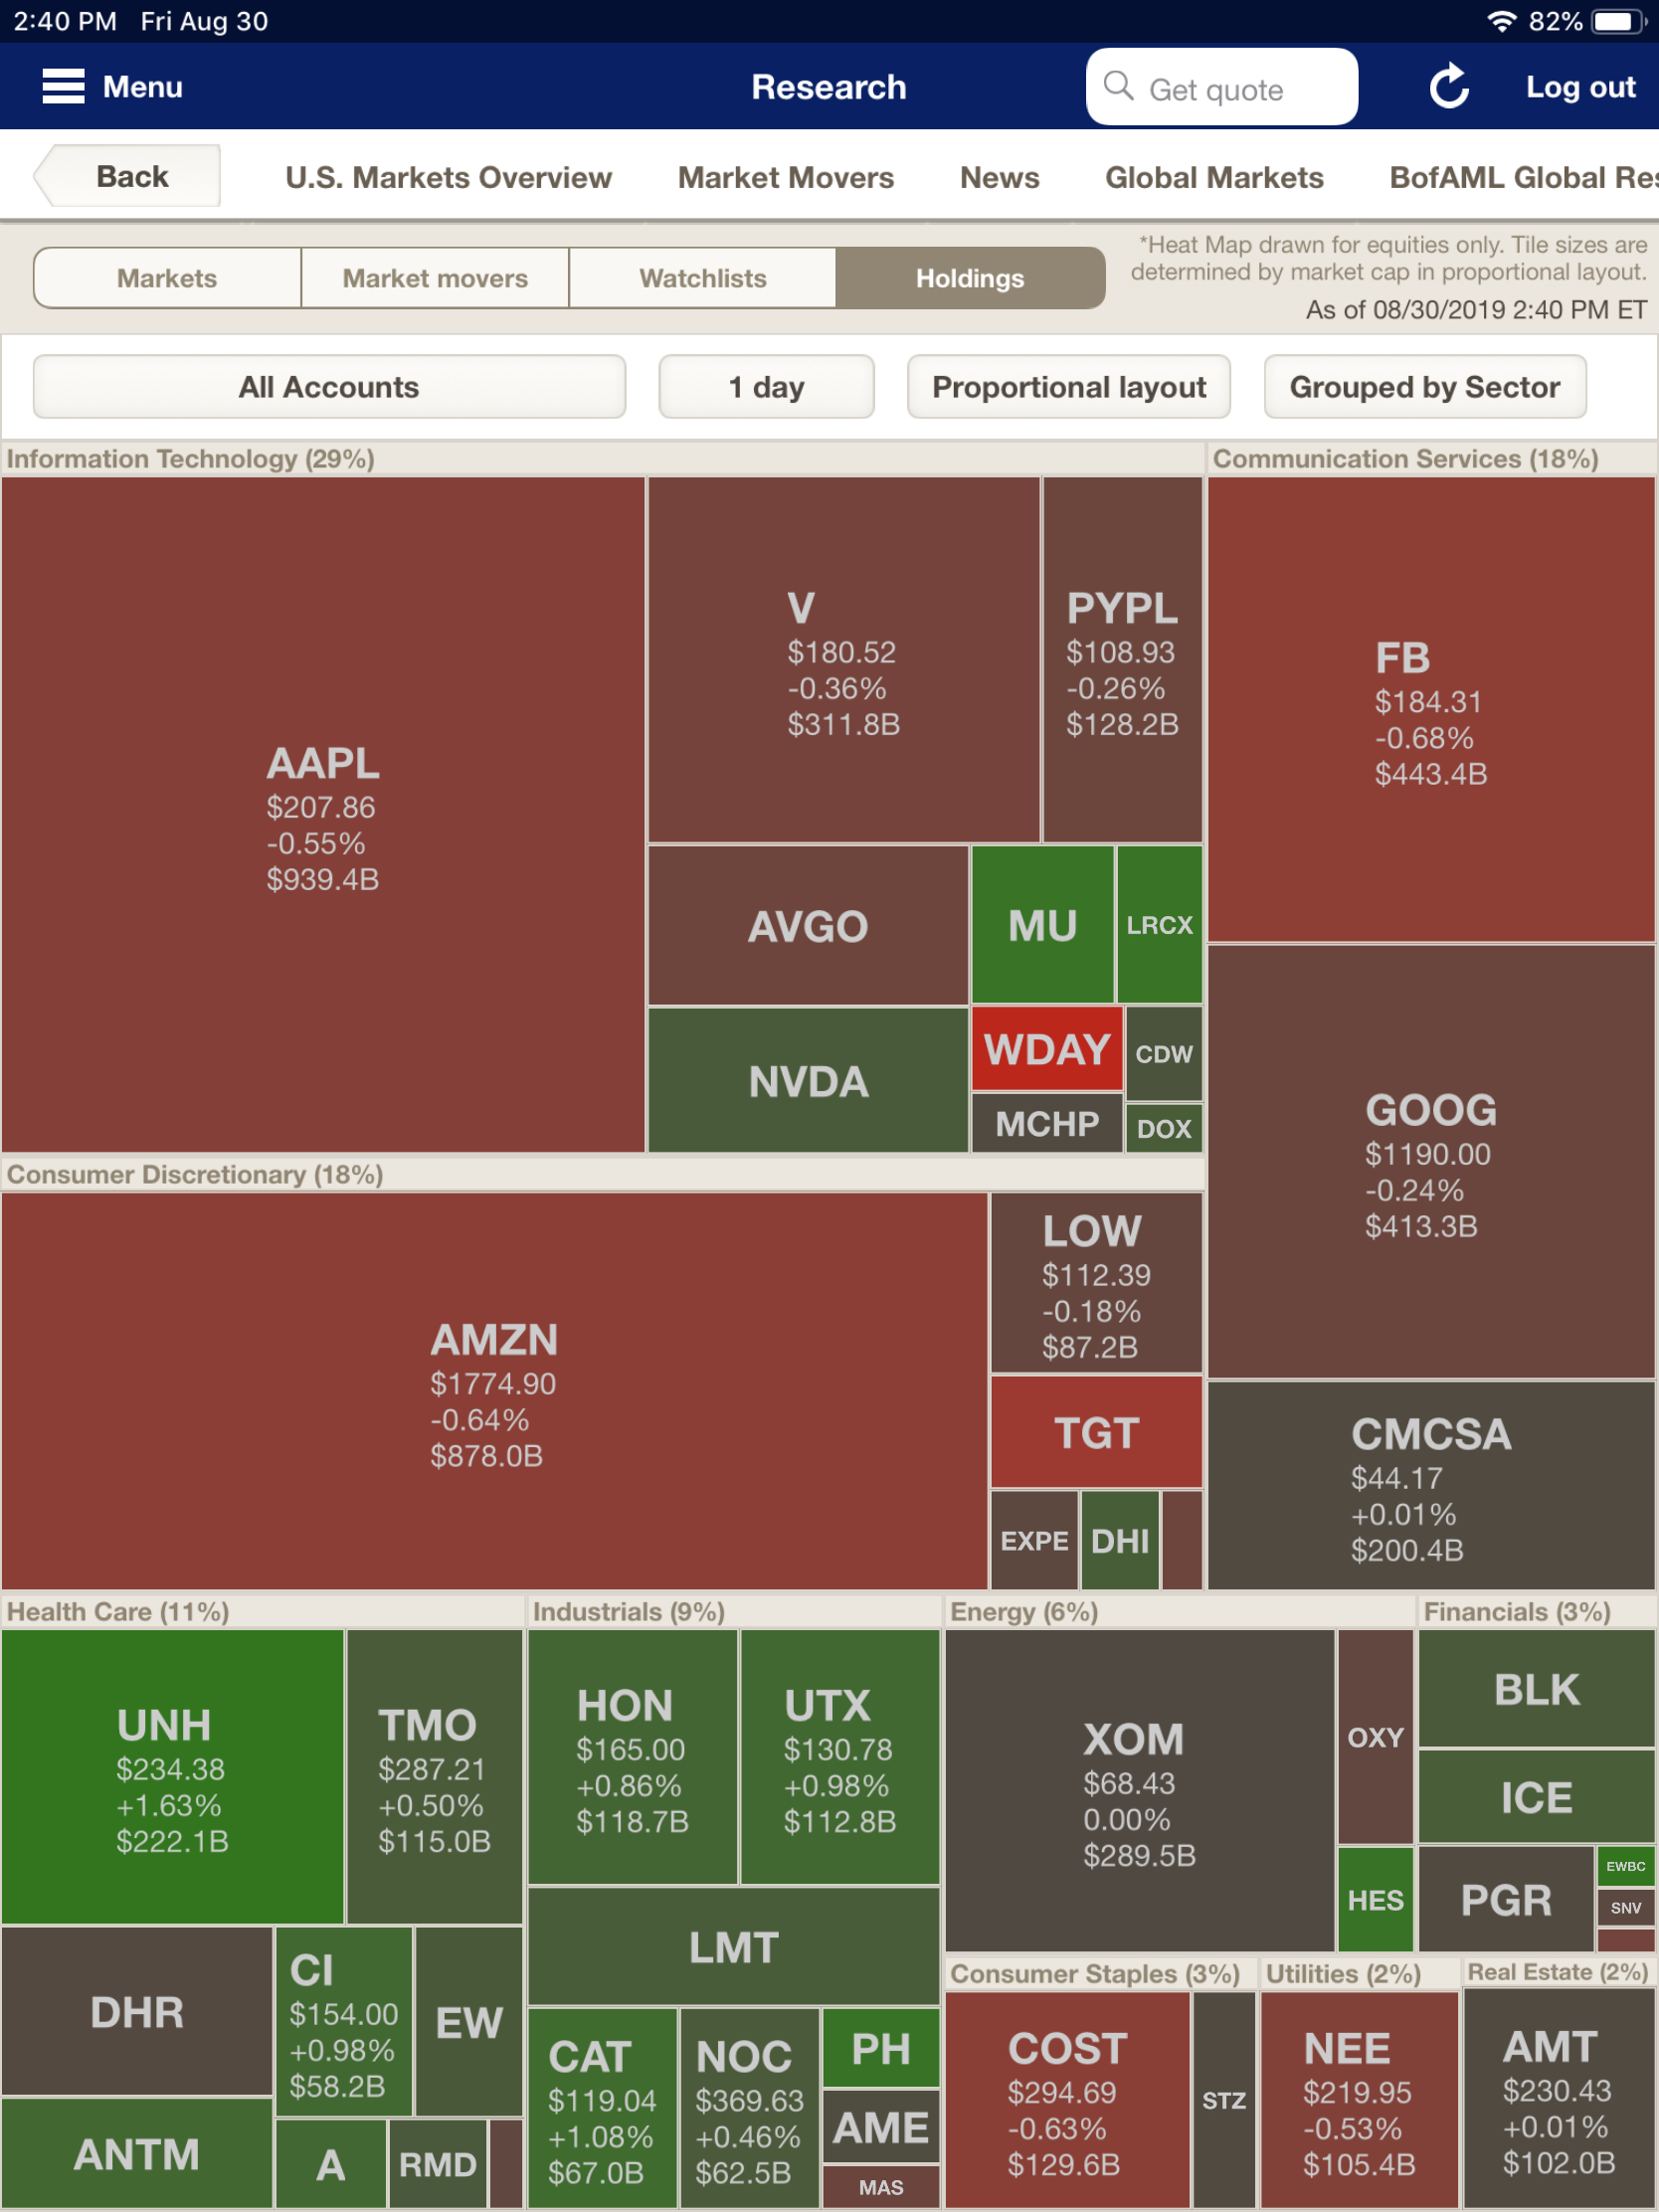 Merrill Lynch's portfolio heat map